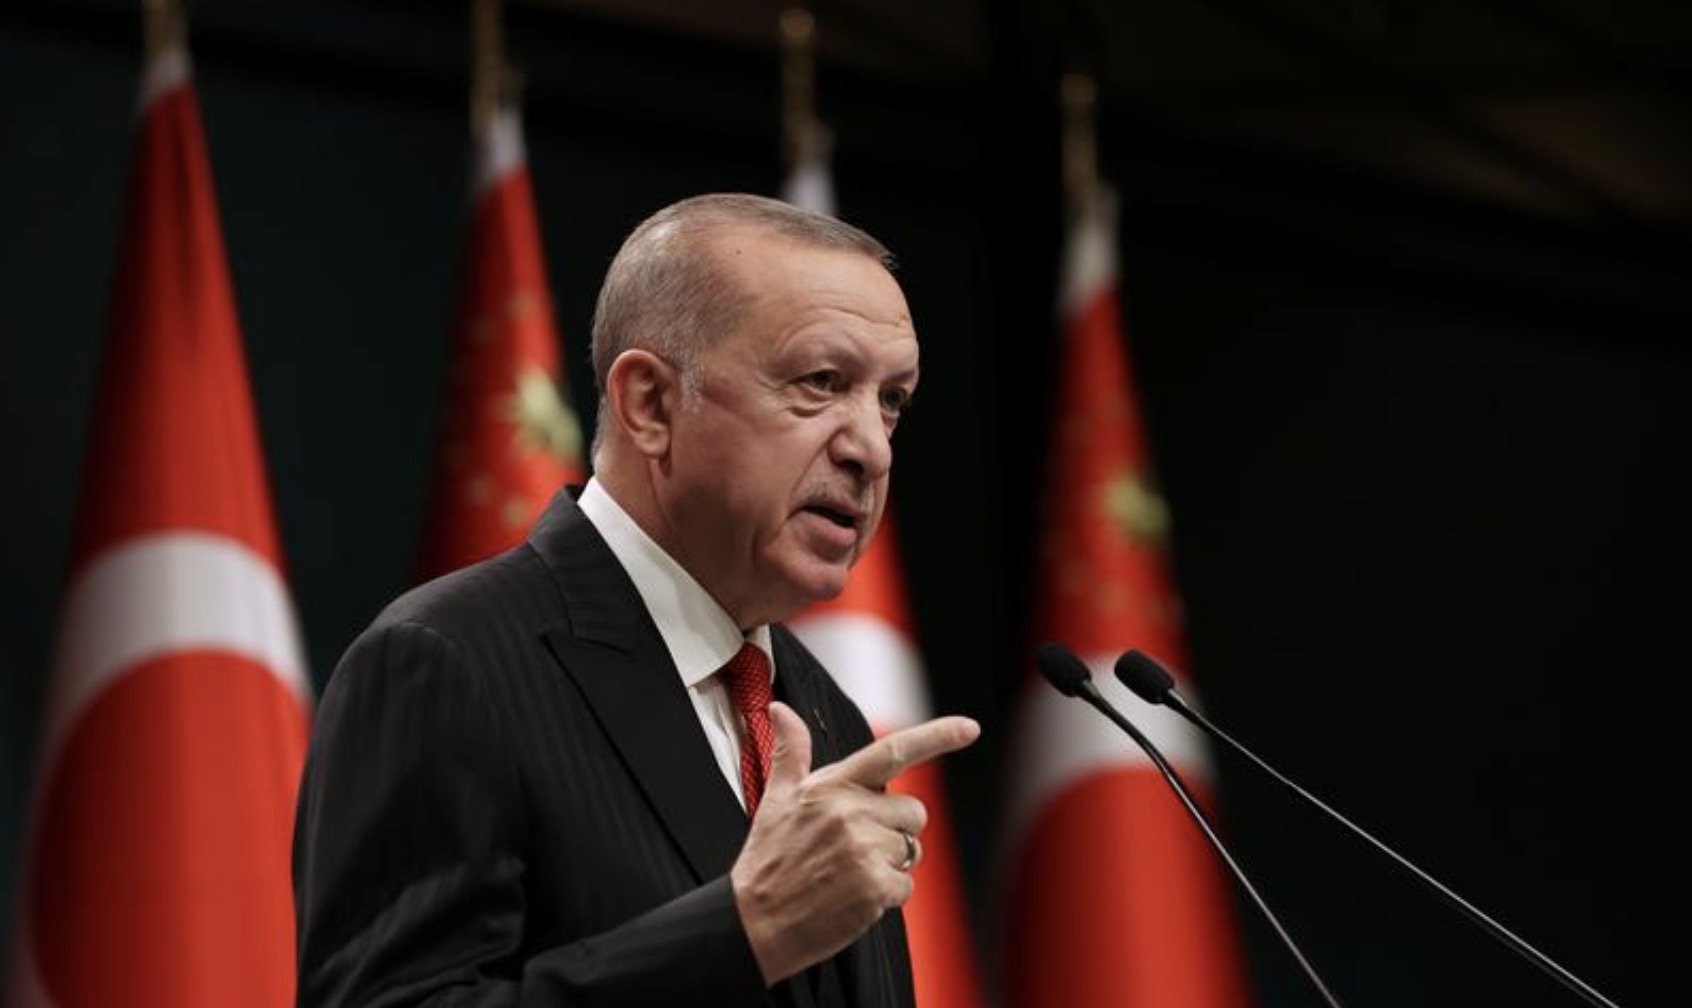 Erdoğan: If the United States sanctions Turkey, it disrespects its allies.